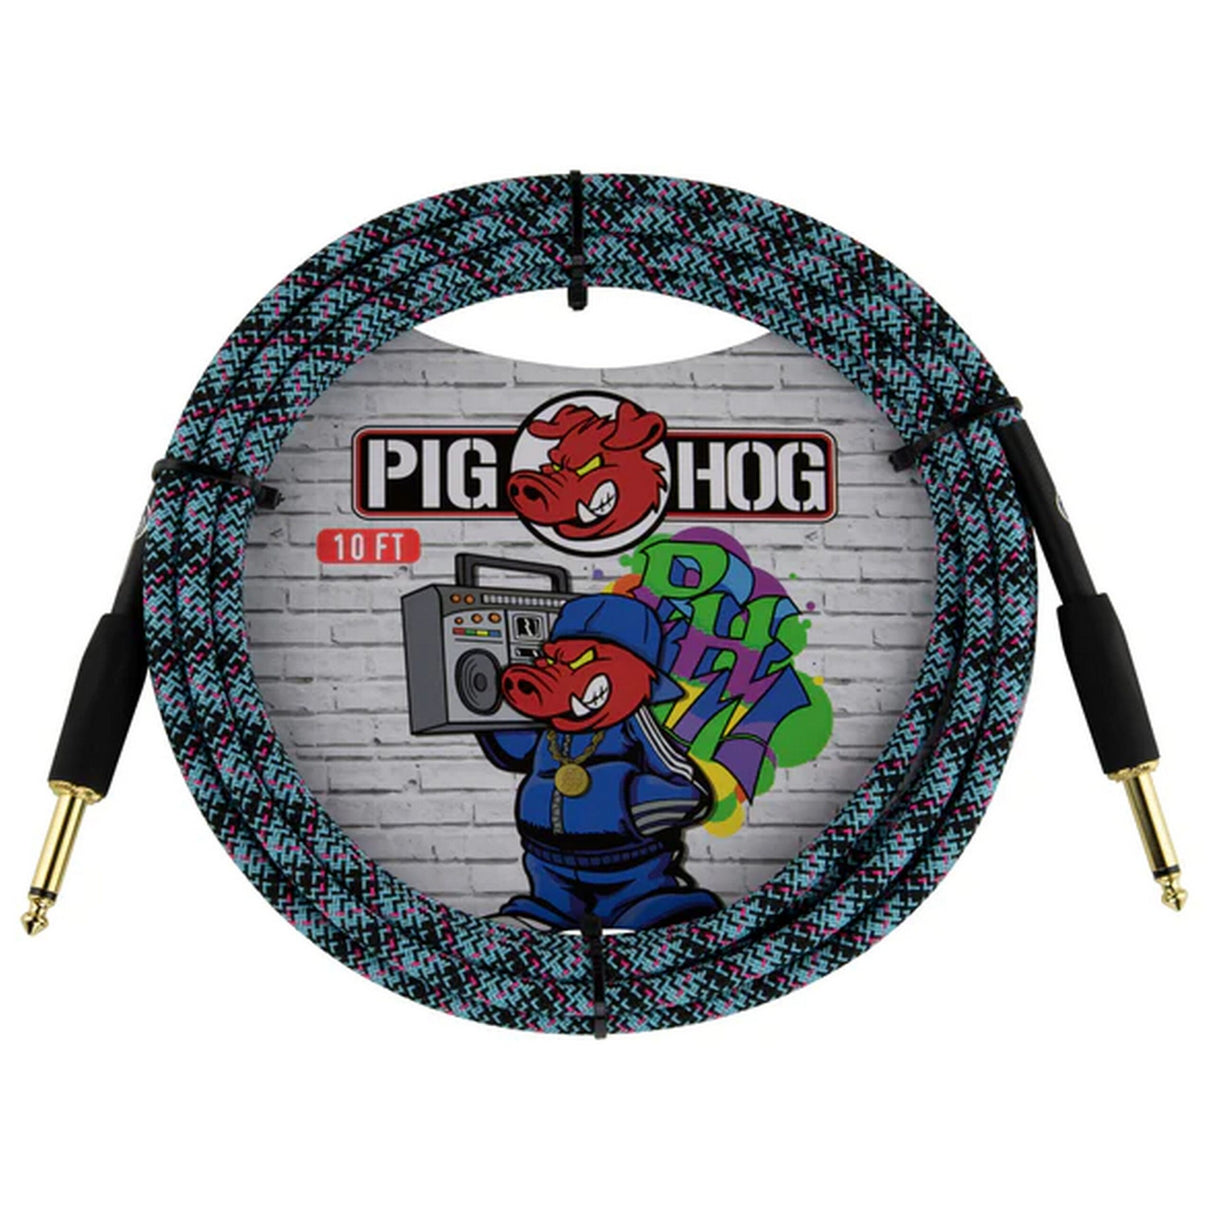 Pig Hog PCH10GBL Blue Graffiti Instrument Cable, 10-Feet Straight